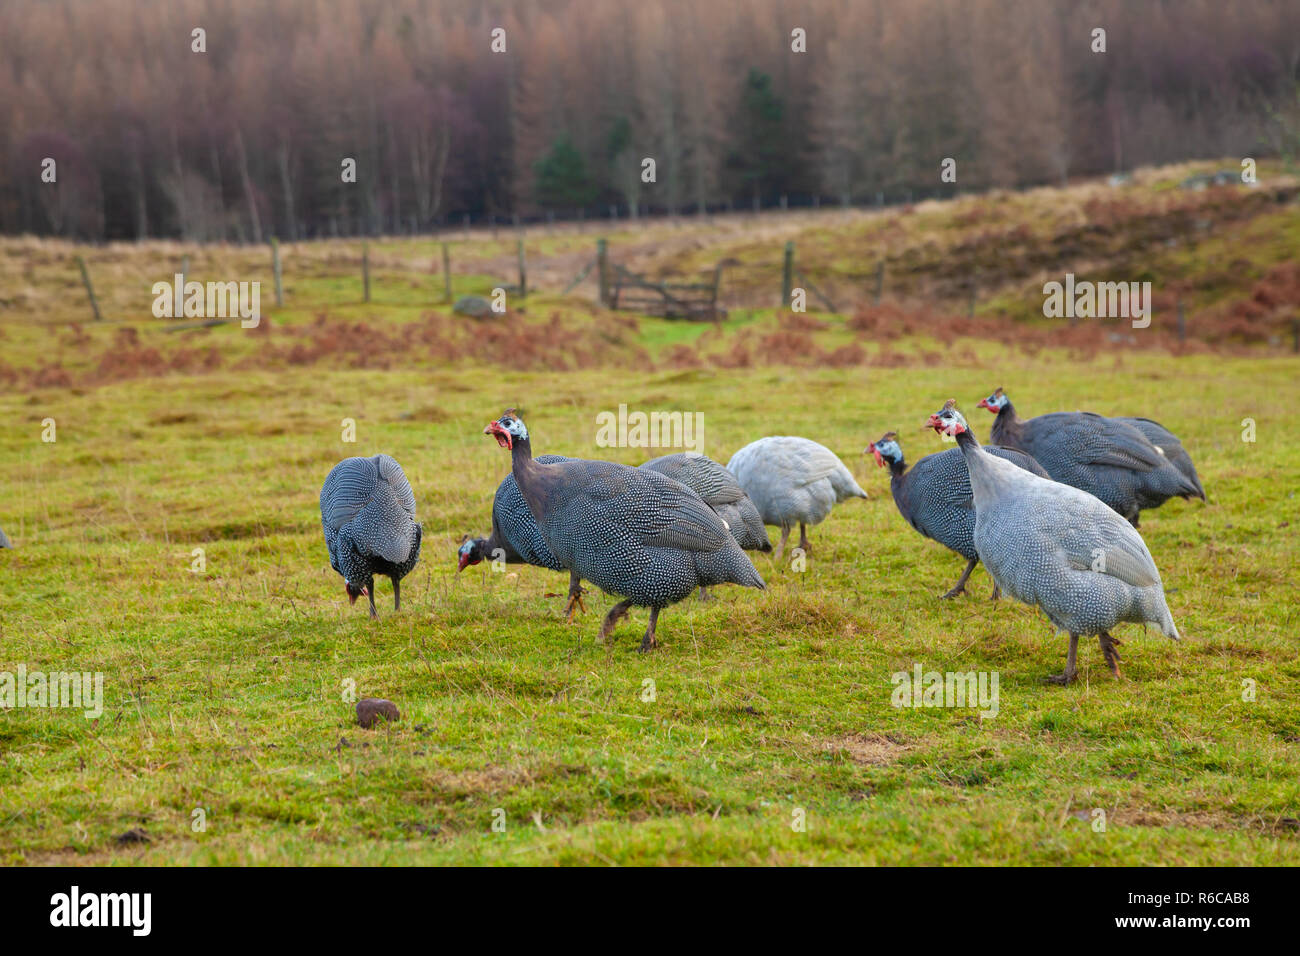 A group of Guinea Fowl in a field near Dunkeld Scotland. Stock Photo